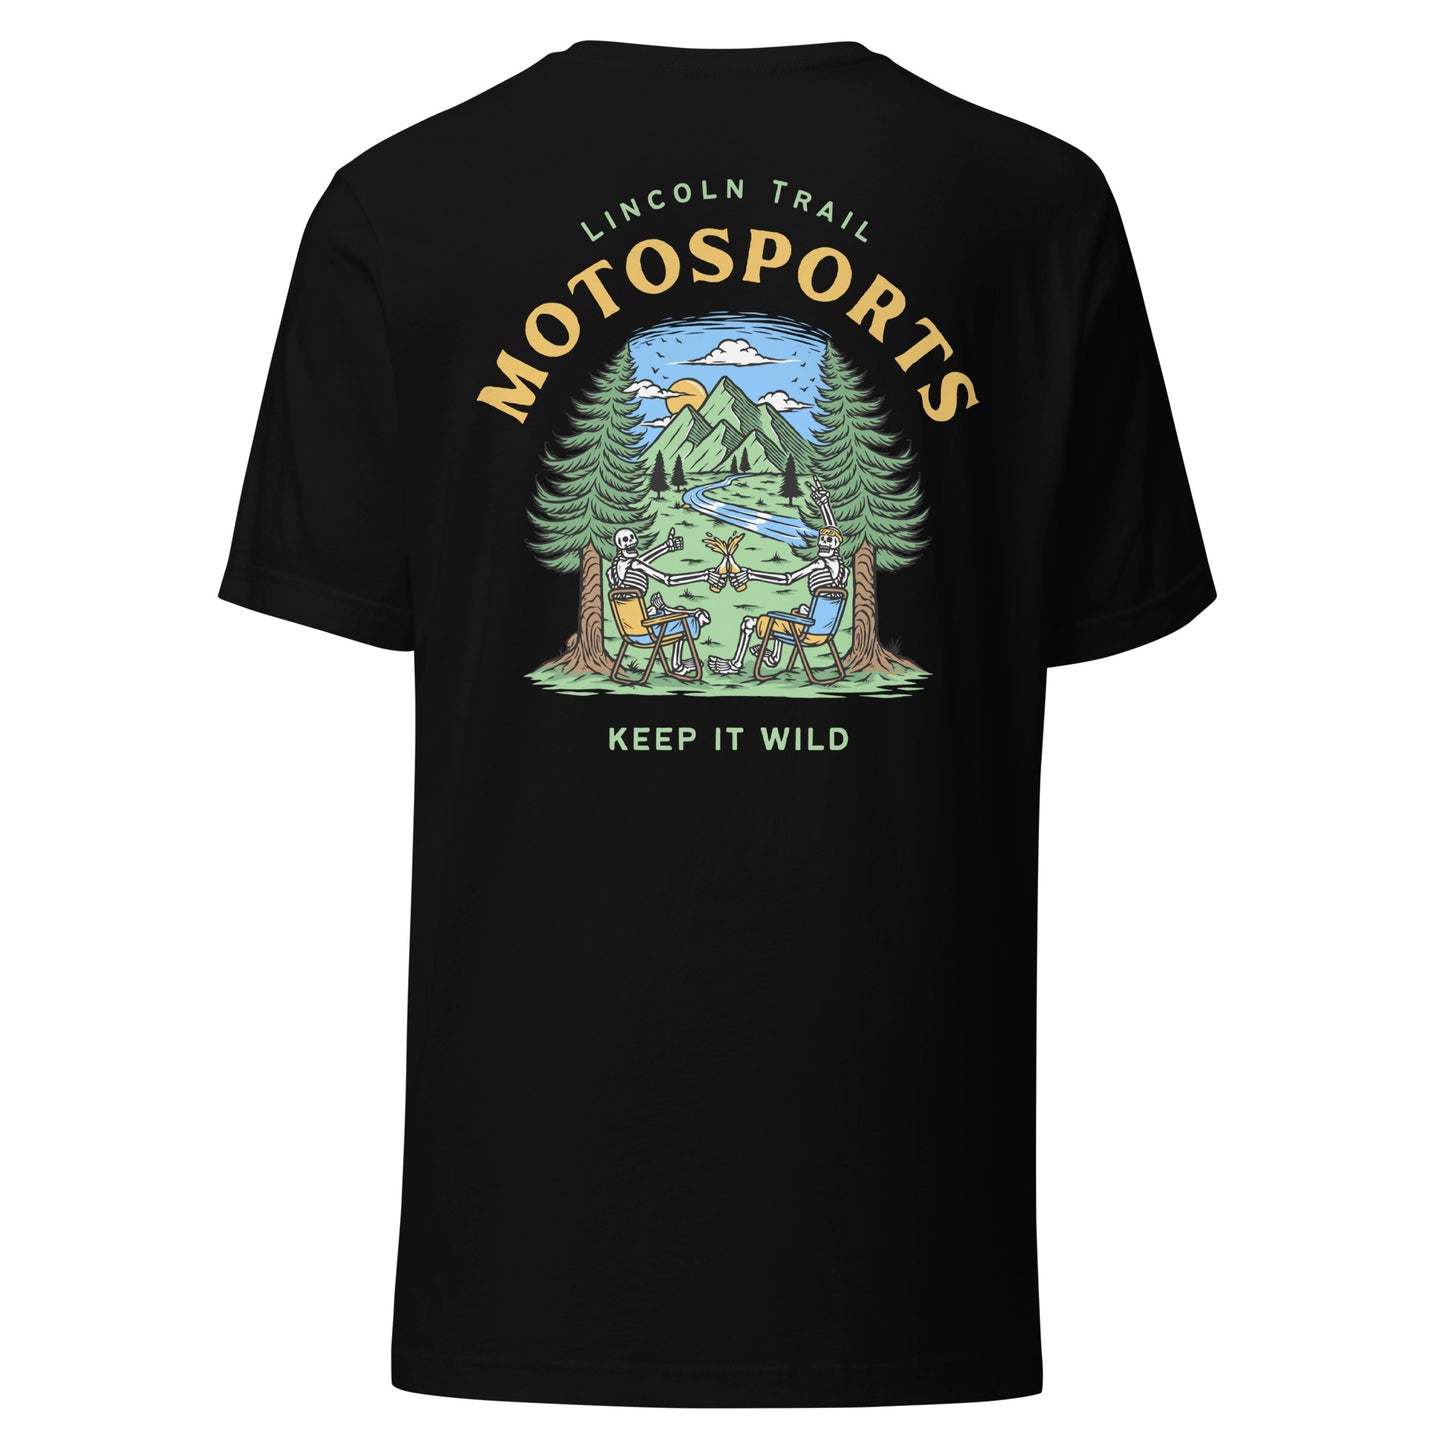 Lincoln Trail Motosports Keep It Wild T-Shirt